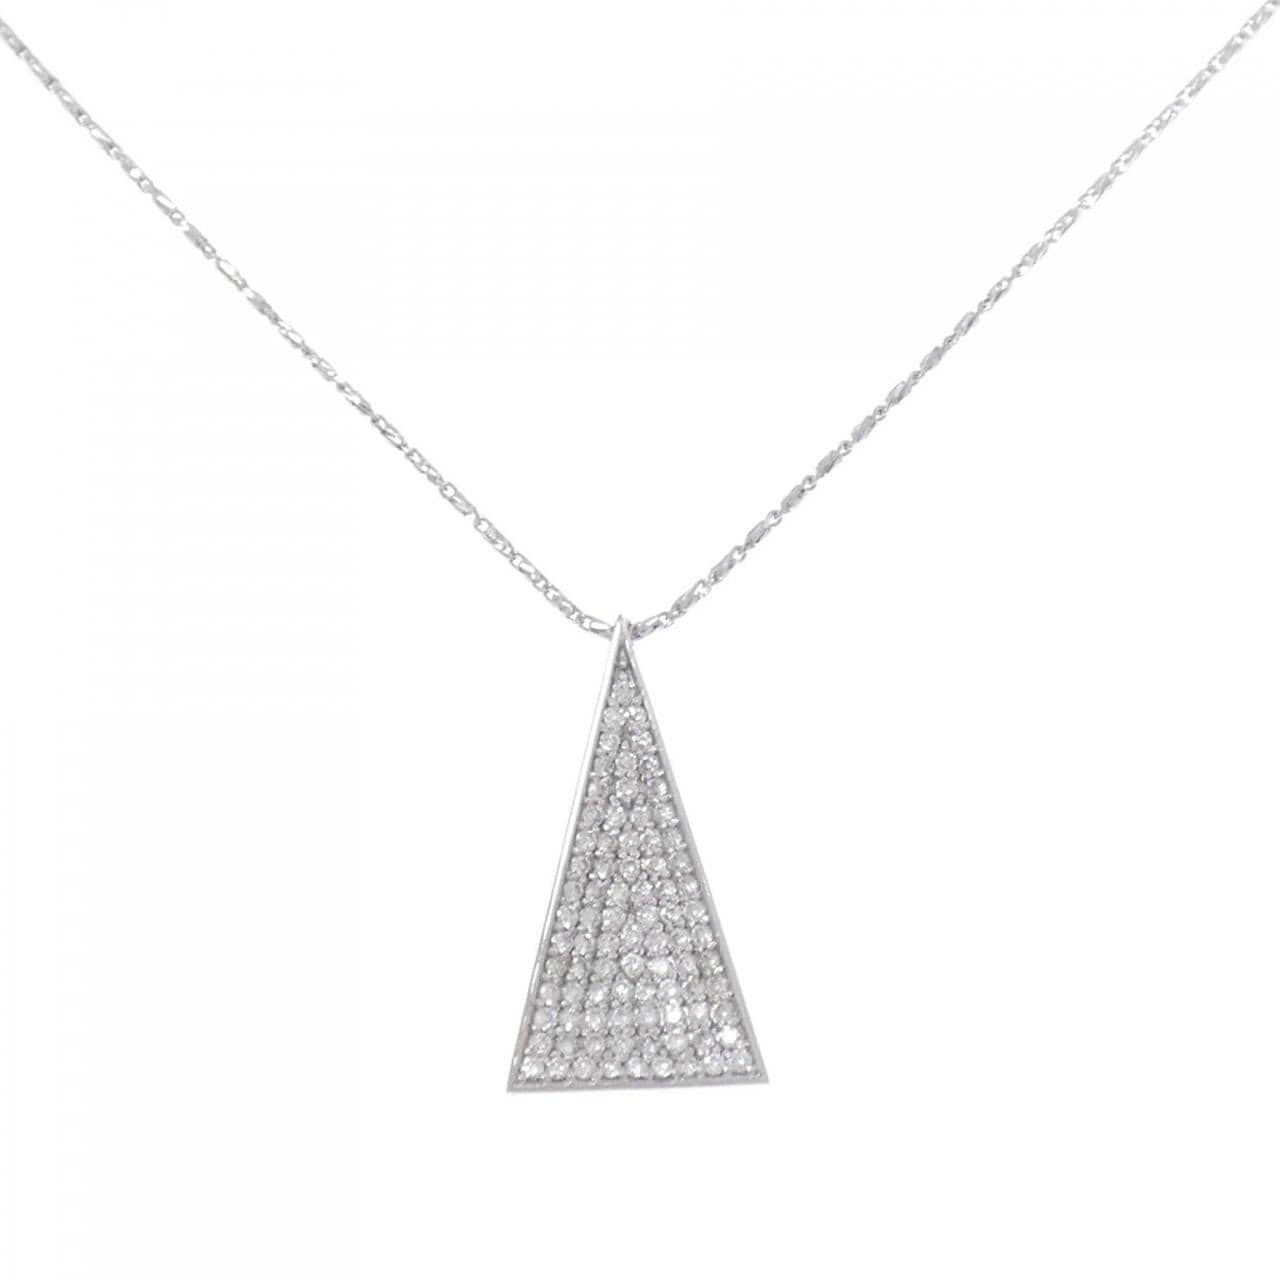 K18WG/750WG Diamond necklace 0.70CT